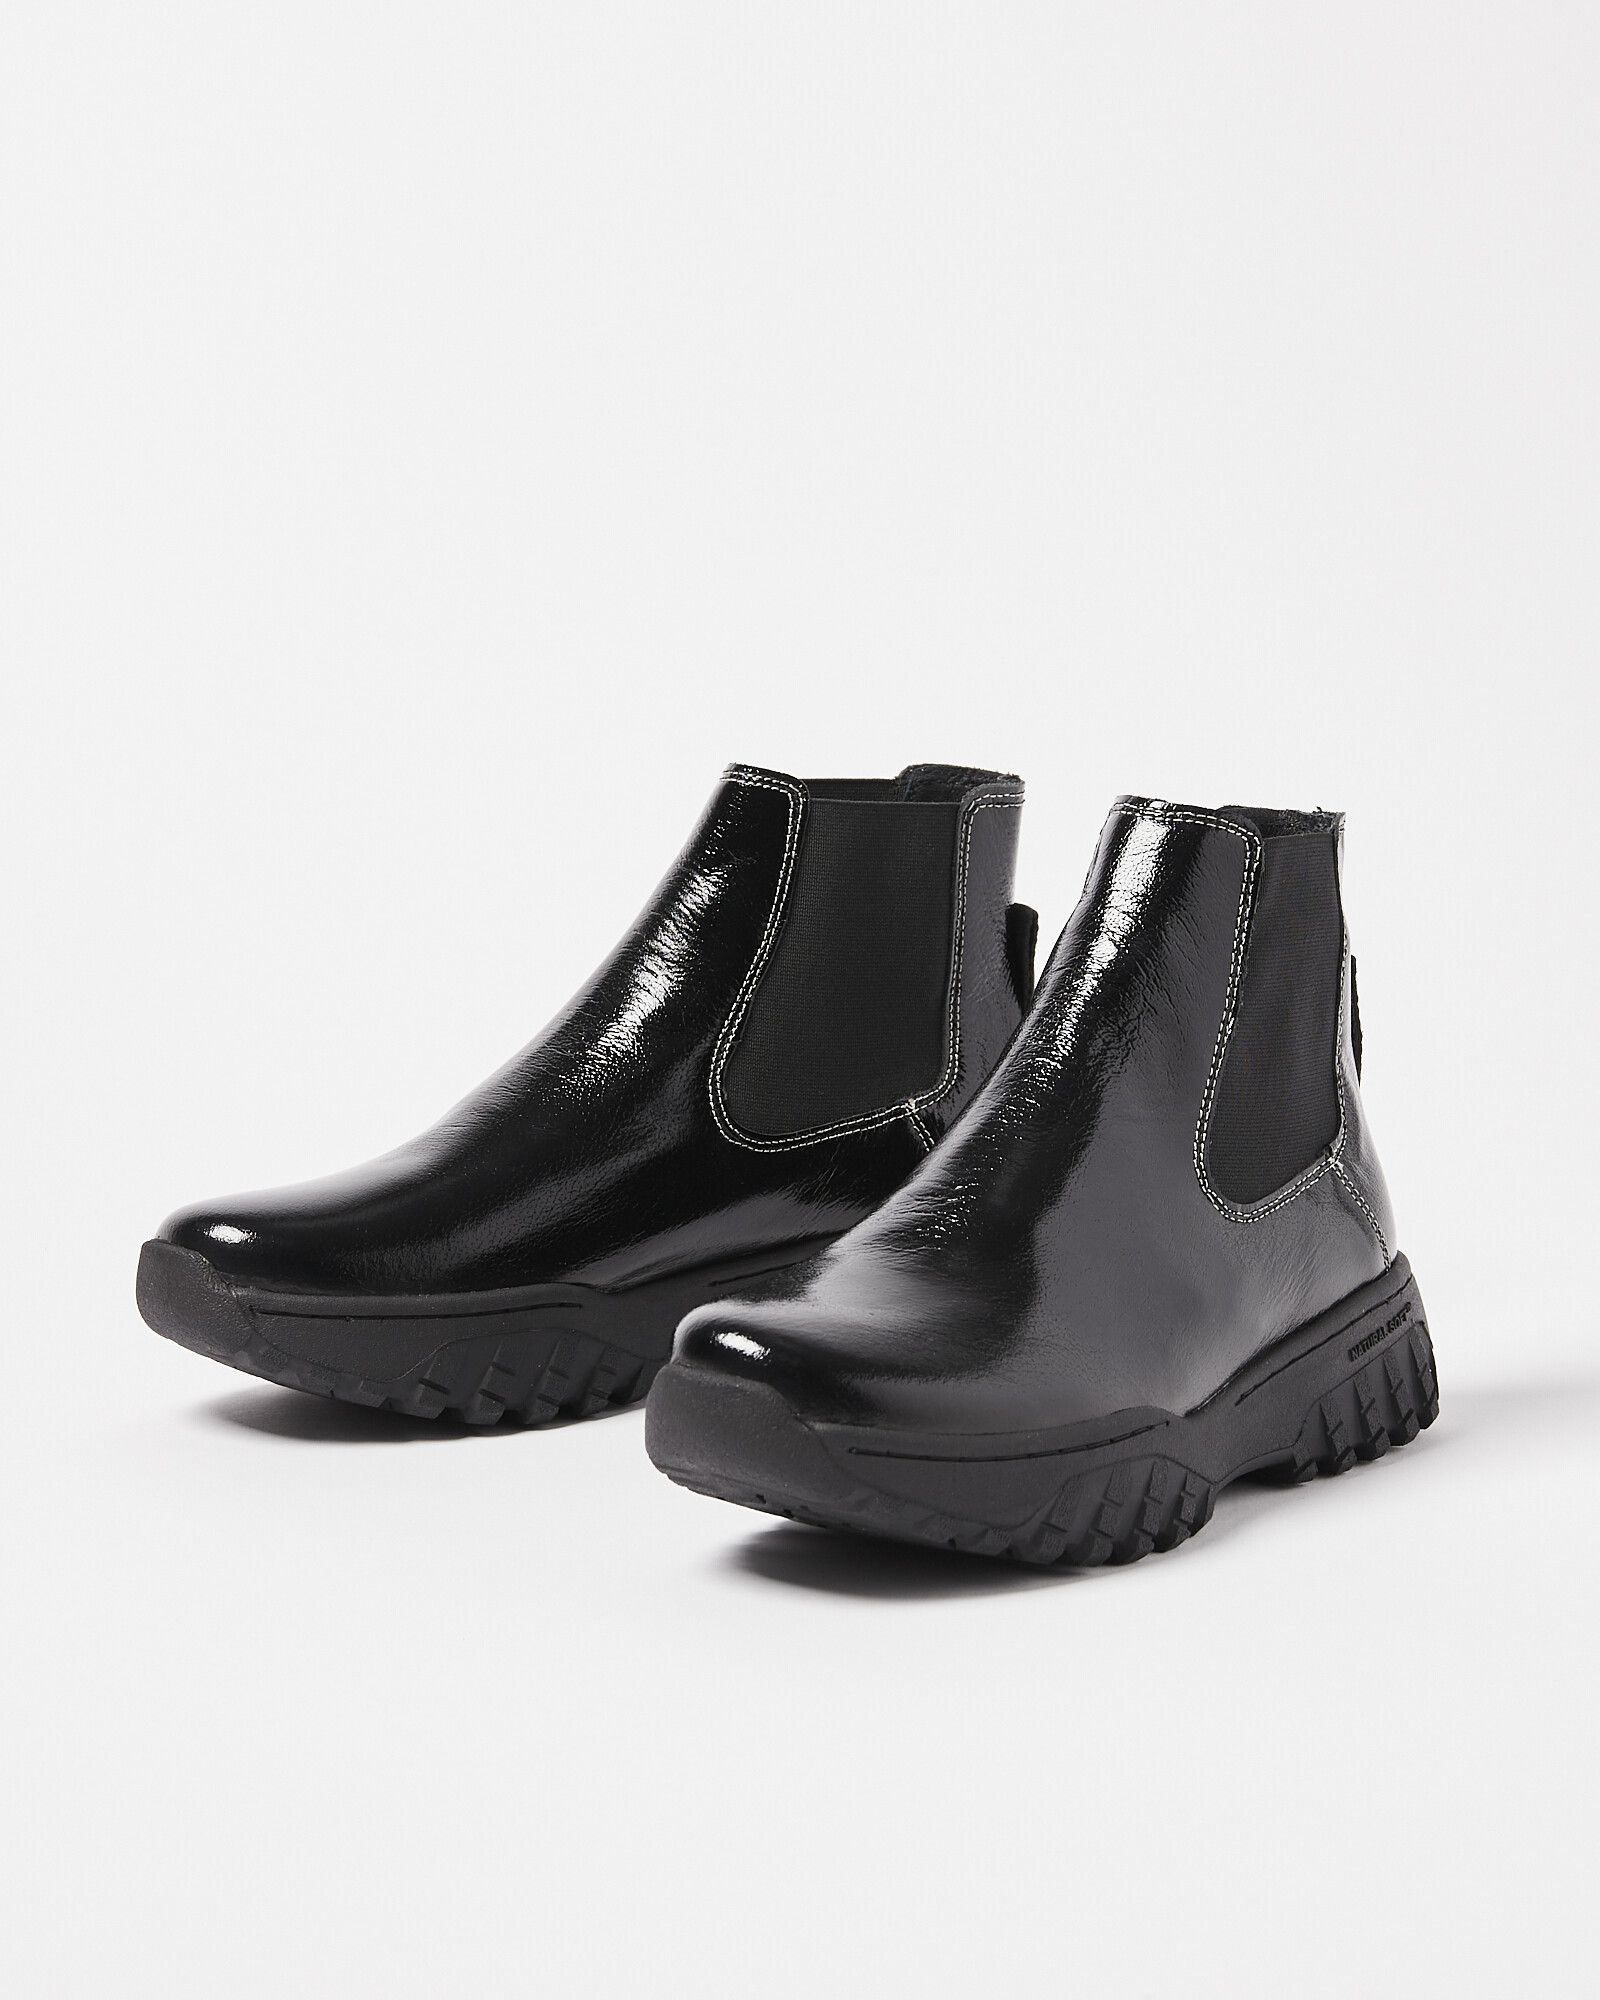 Woden Elena Patent Black Ankle Boots | Oliver Bonas